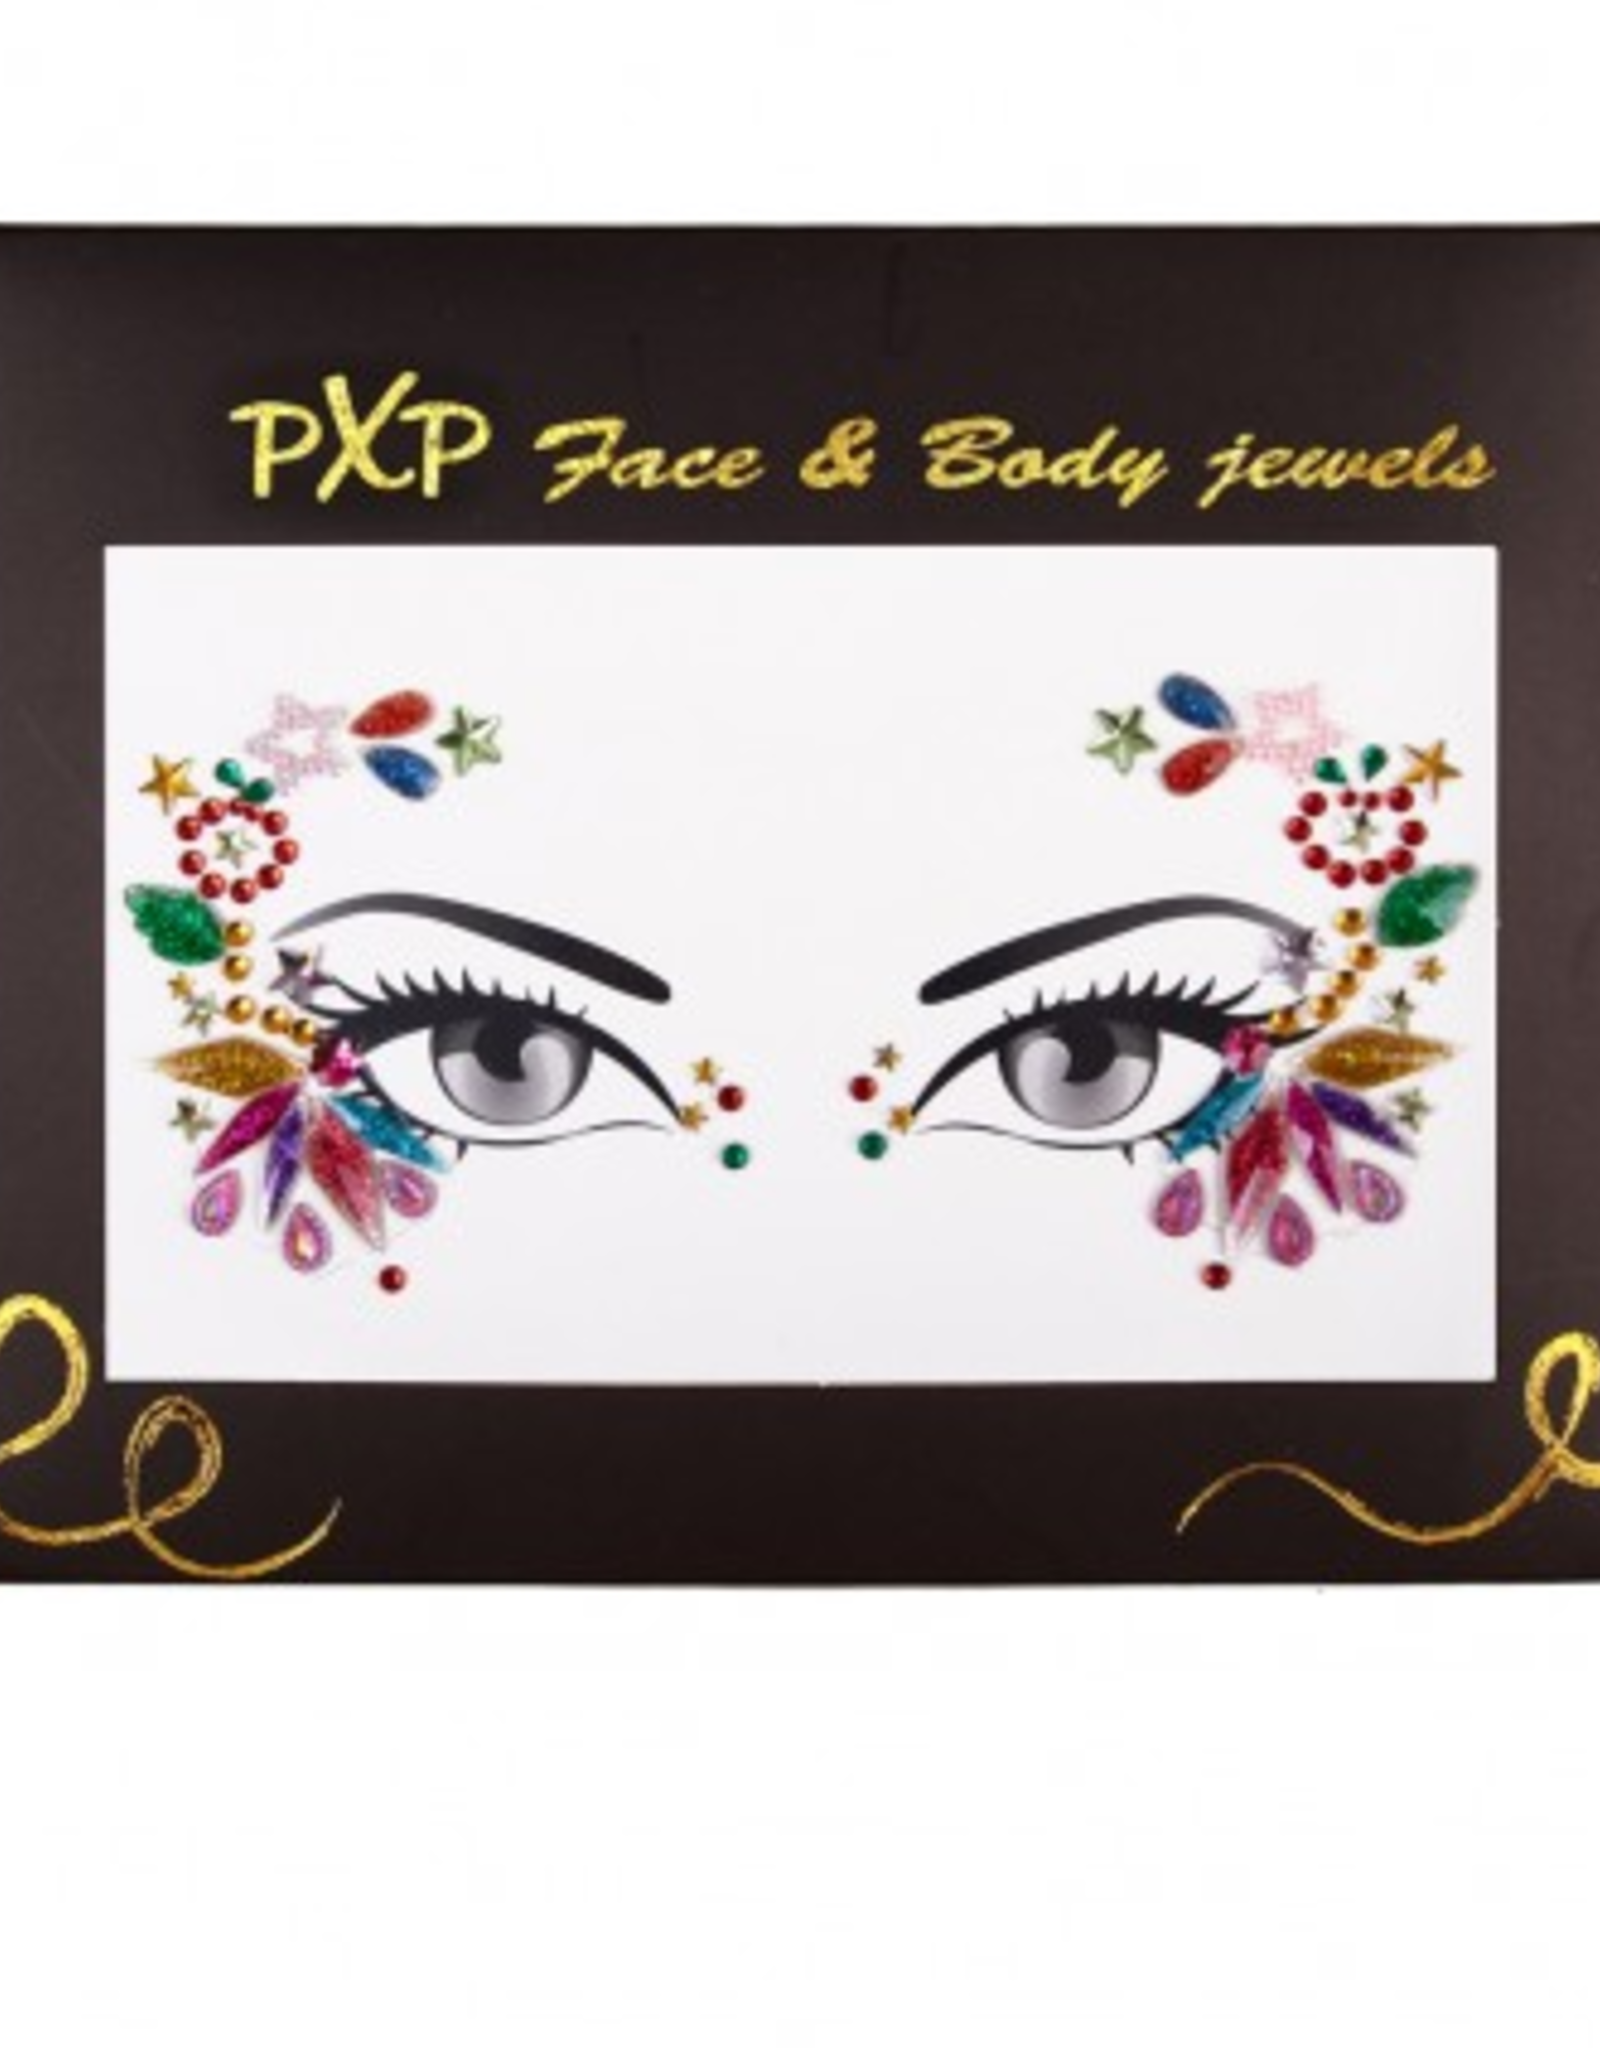 PartyXplosion PXP Face & Body jewels Festival Face 18236